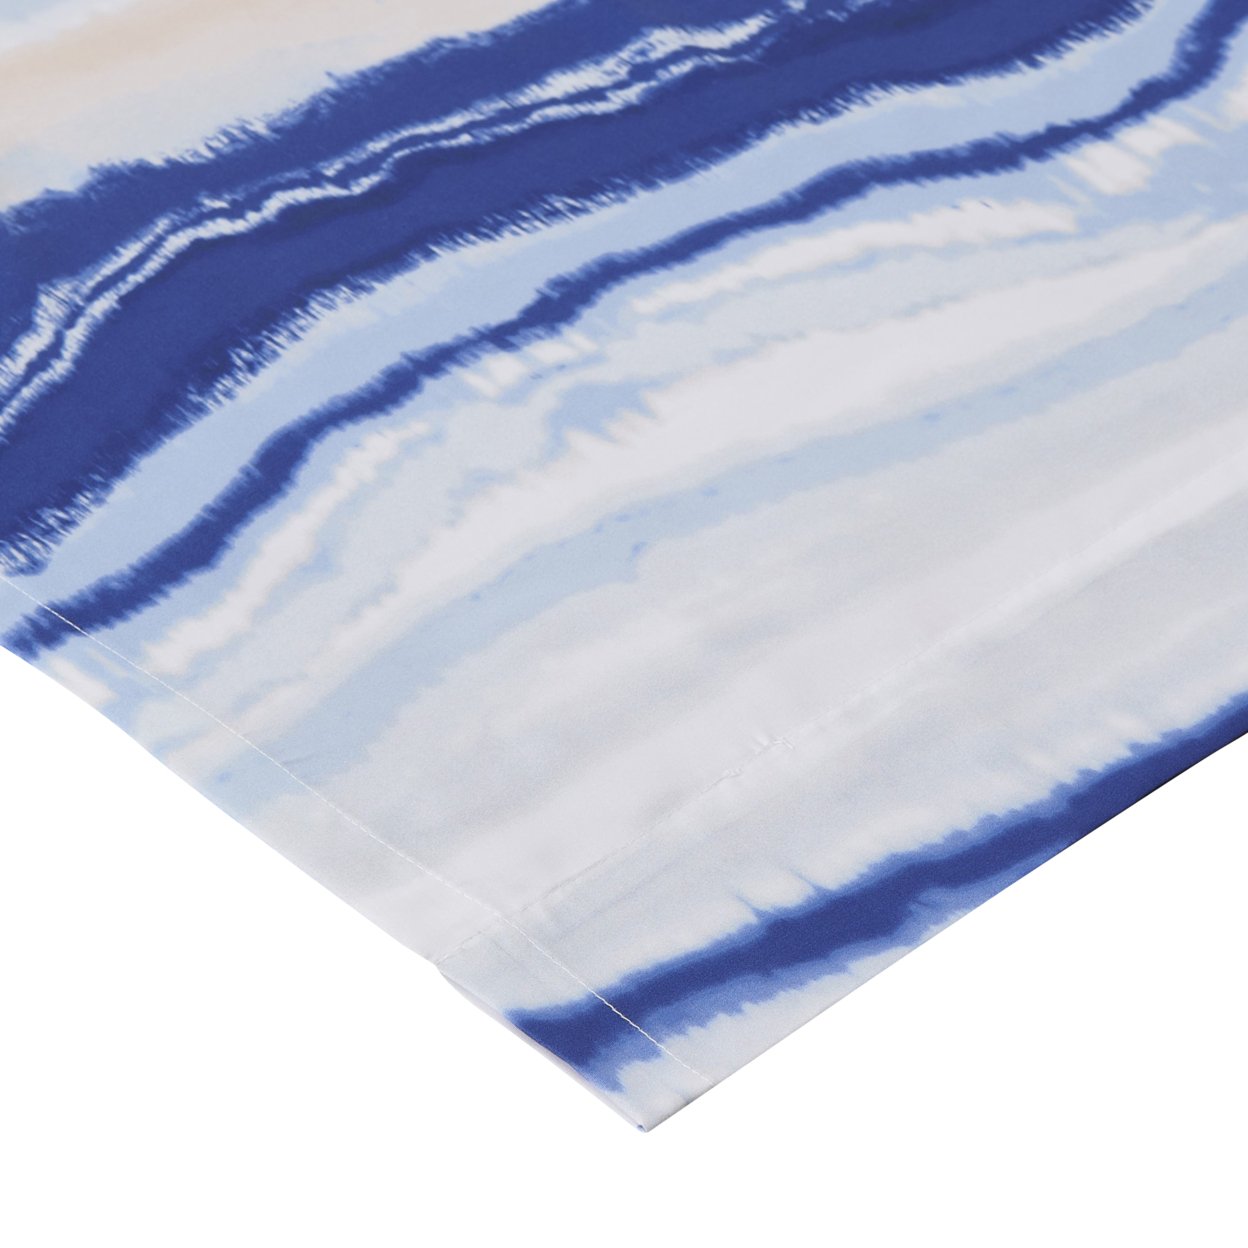 Oda 84 Inch Window Curtains, Microfiber Polyester, Blue Ocean Wave Print